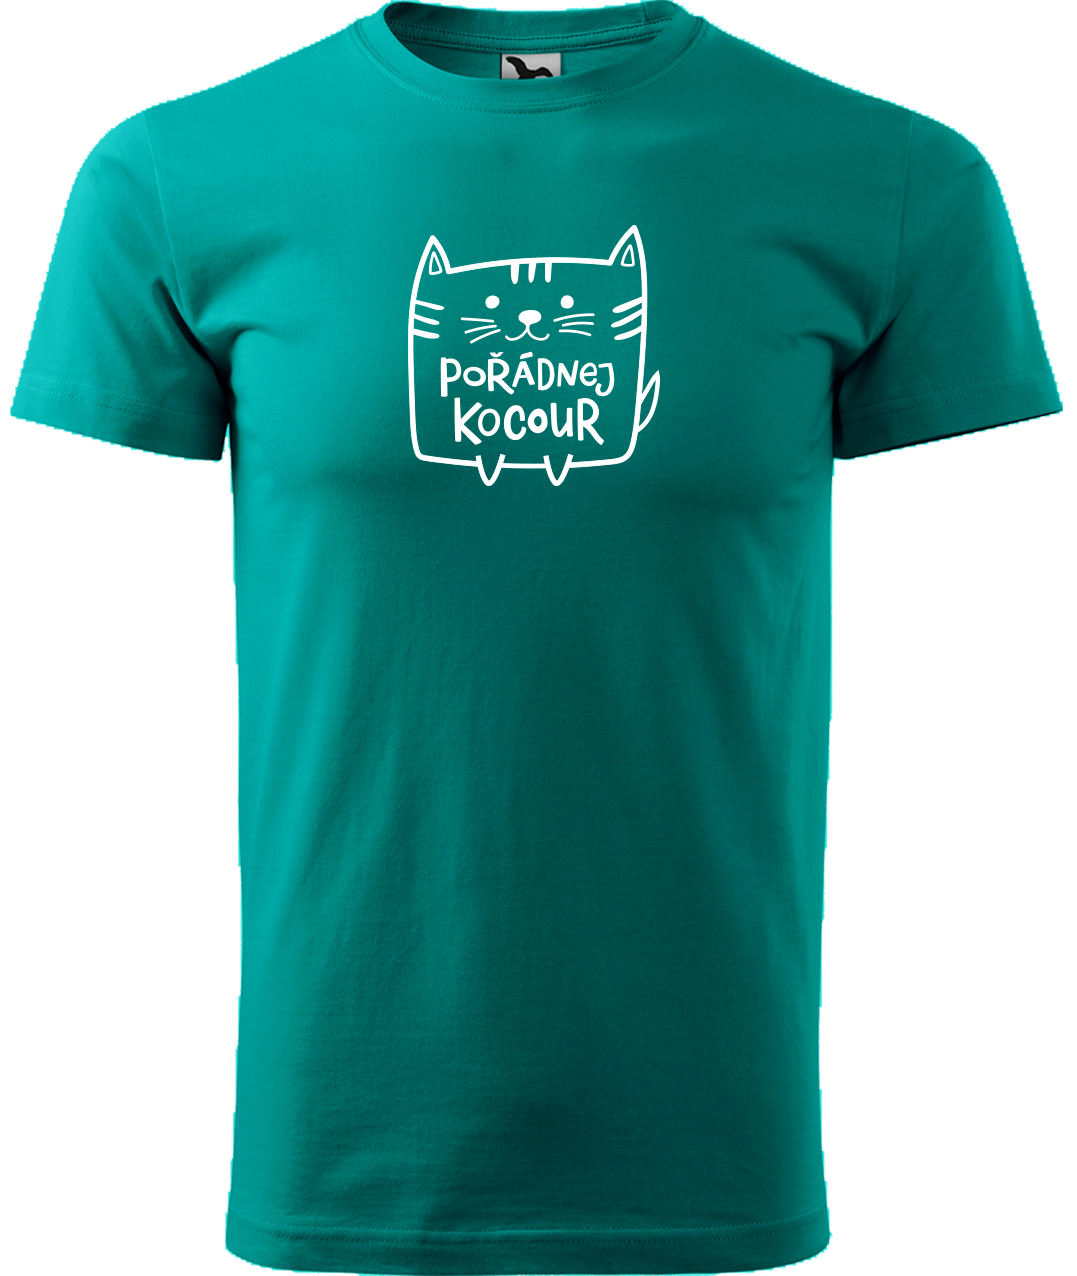 Pánské tričko s kočkou - Pořádnej kocour Velikost: XL, Barva: Emerald (19)